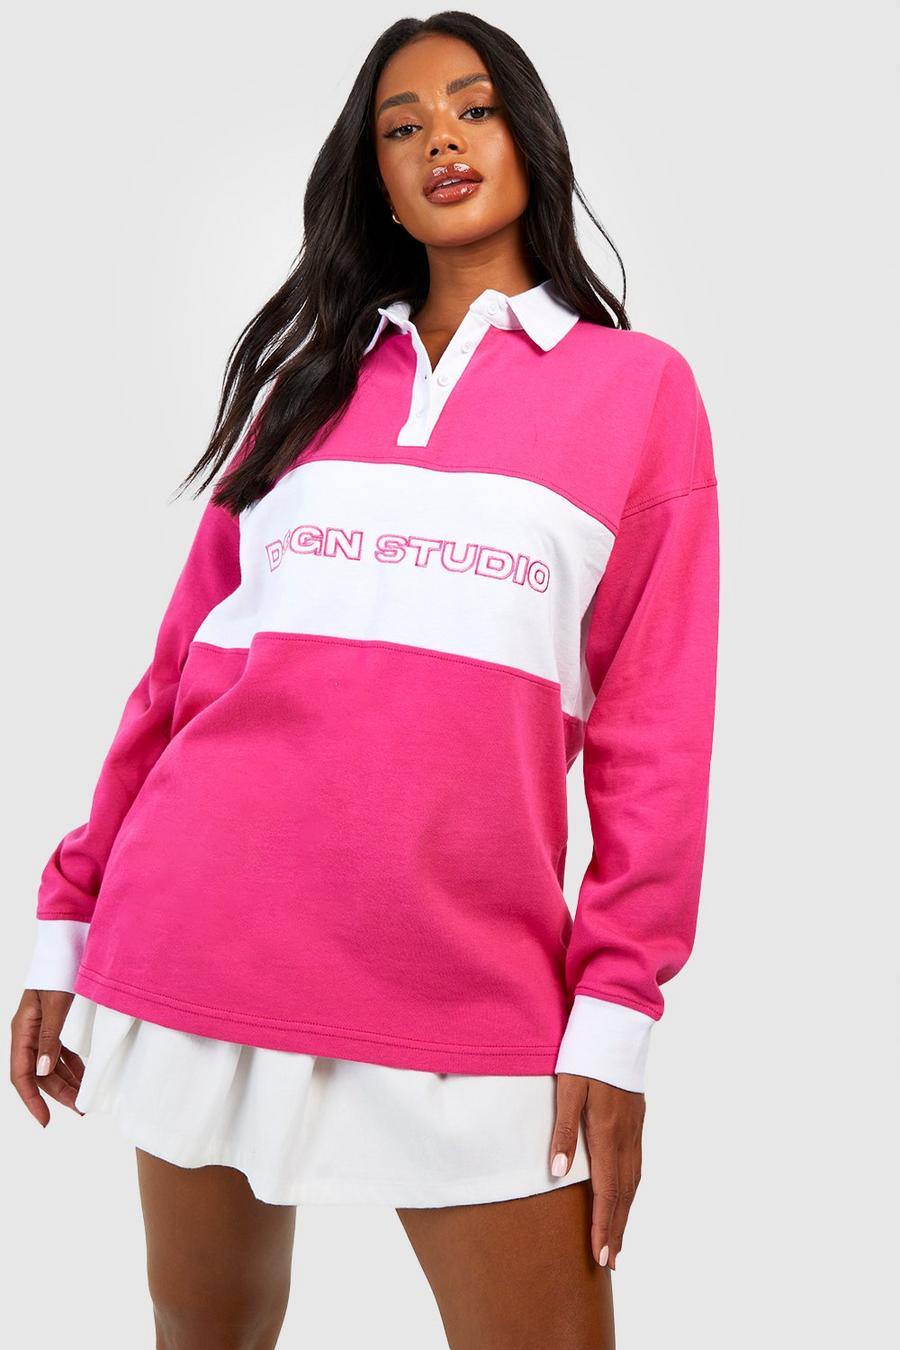 Dsgn Studio Rugby Hemd, Pink image number 1